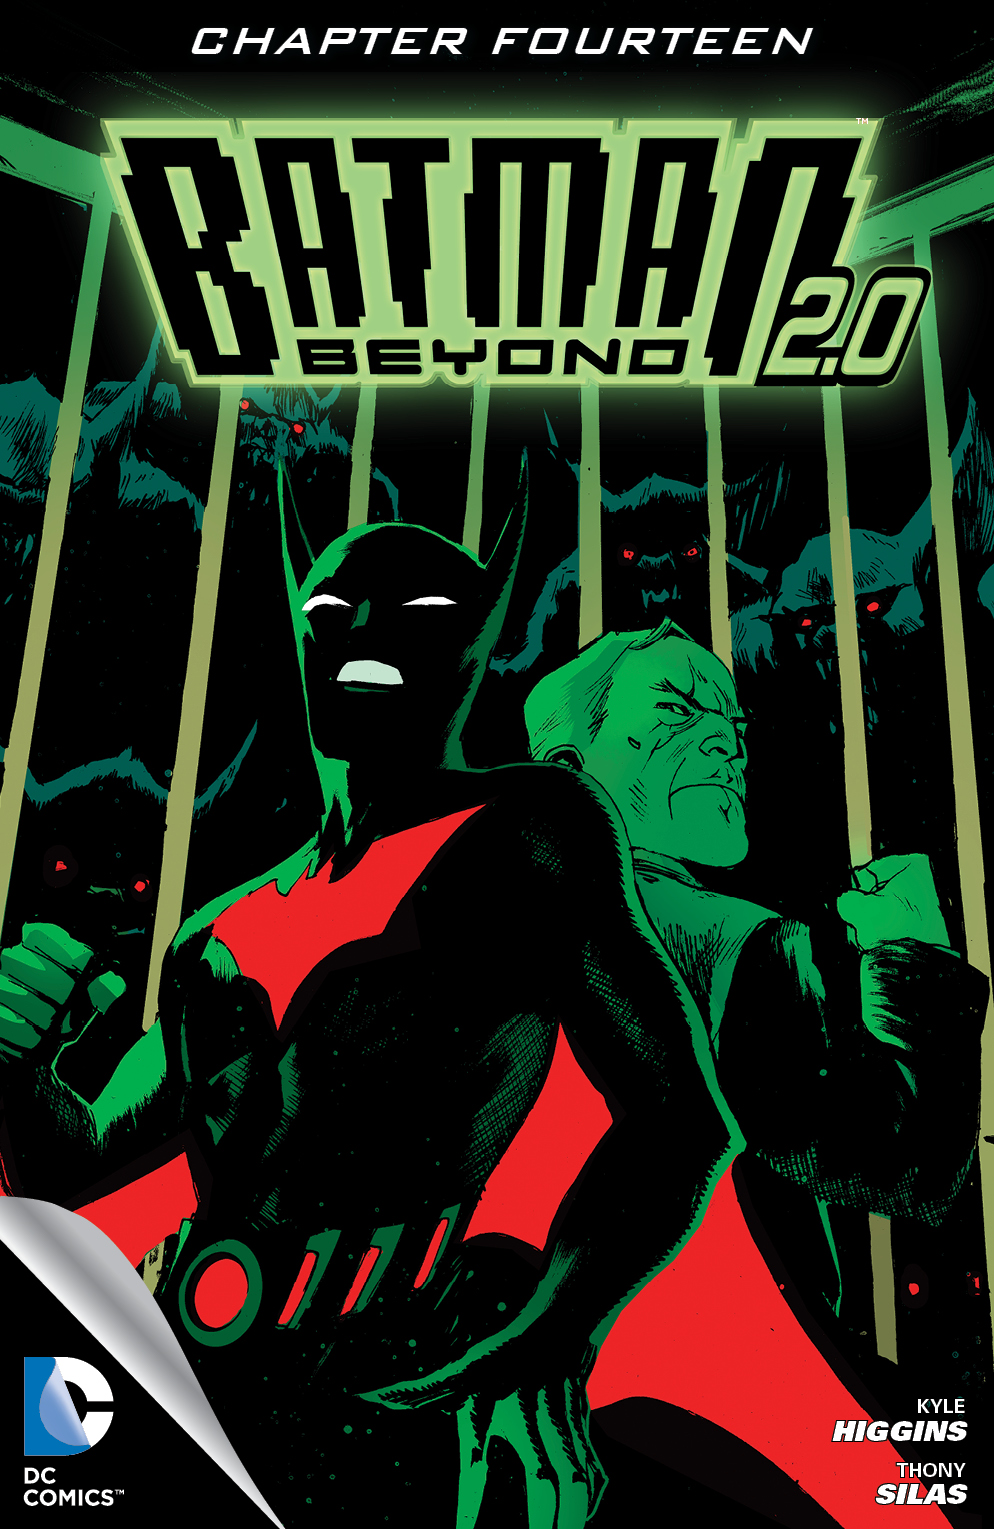 Batman Beyond 2.0 #14 preview images